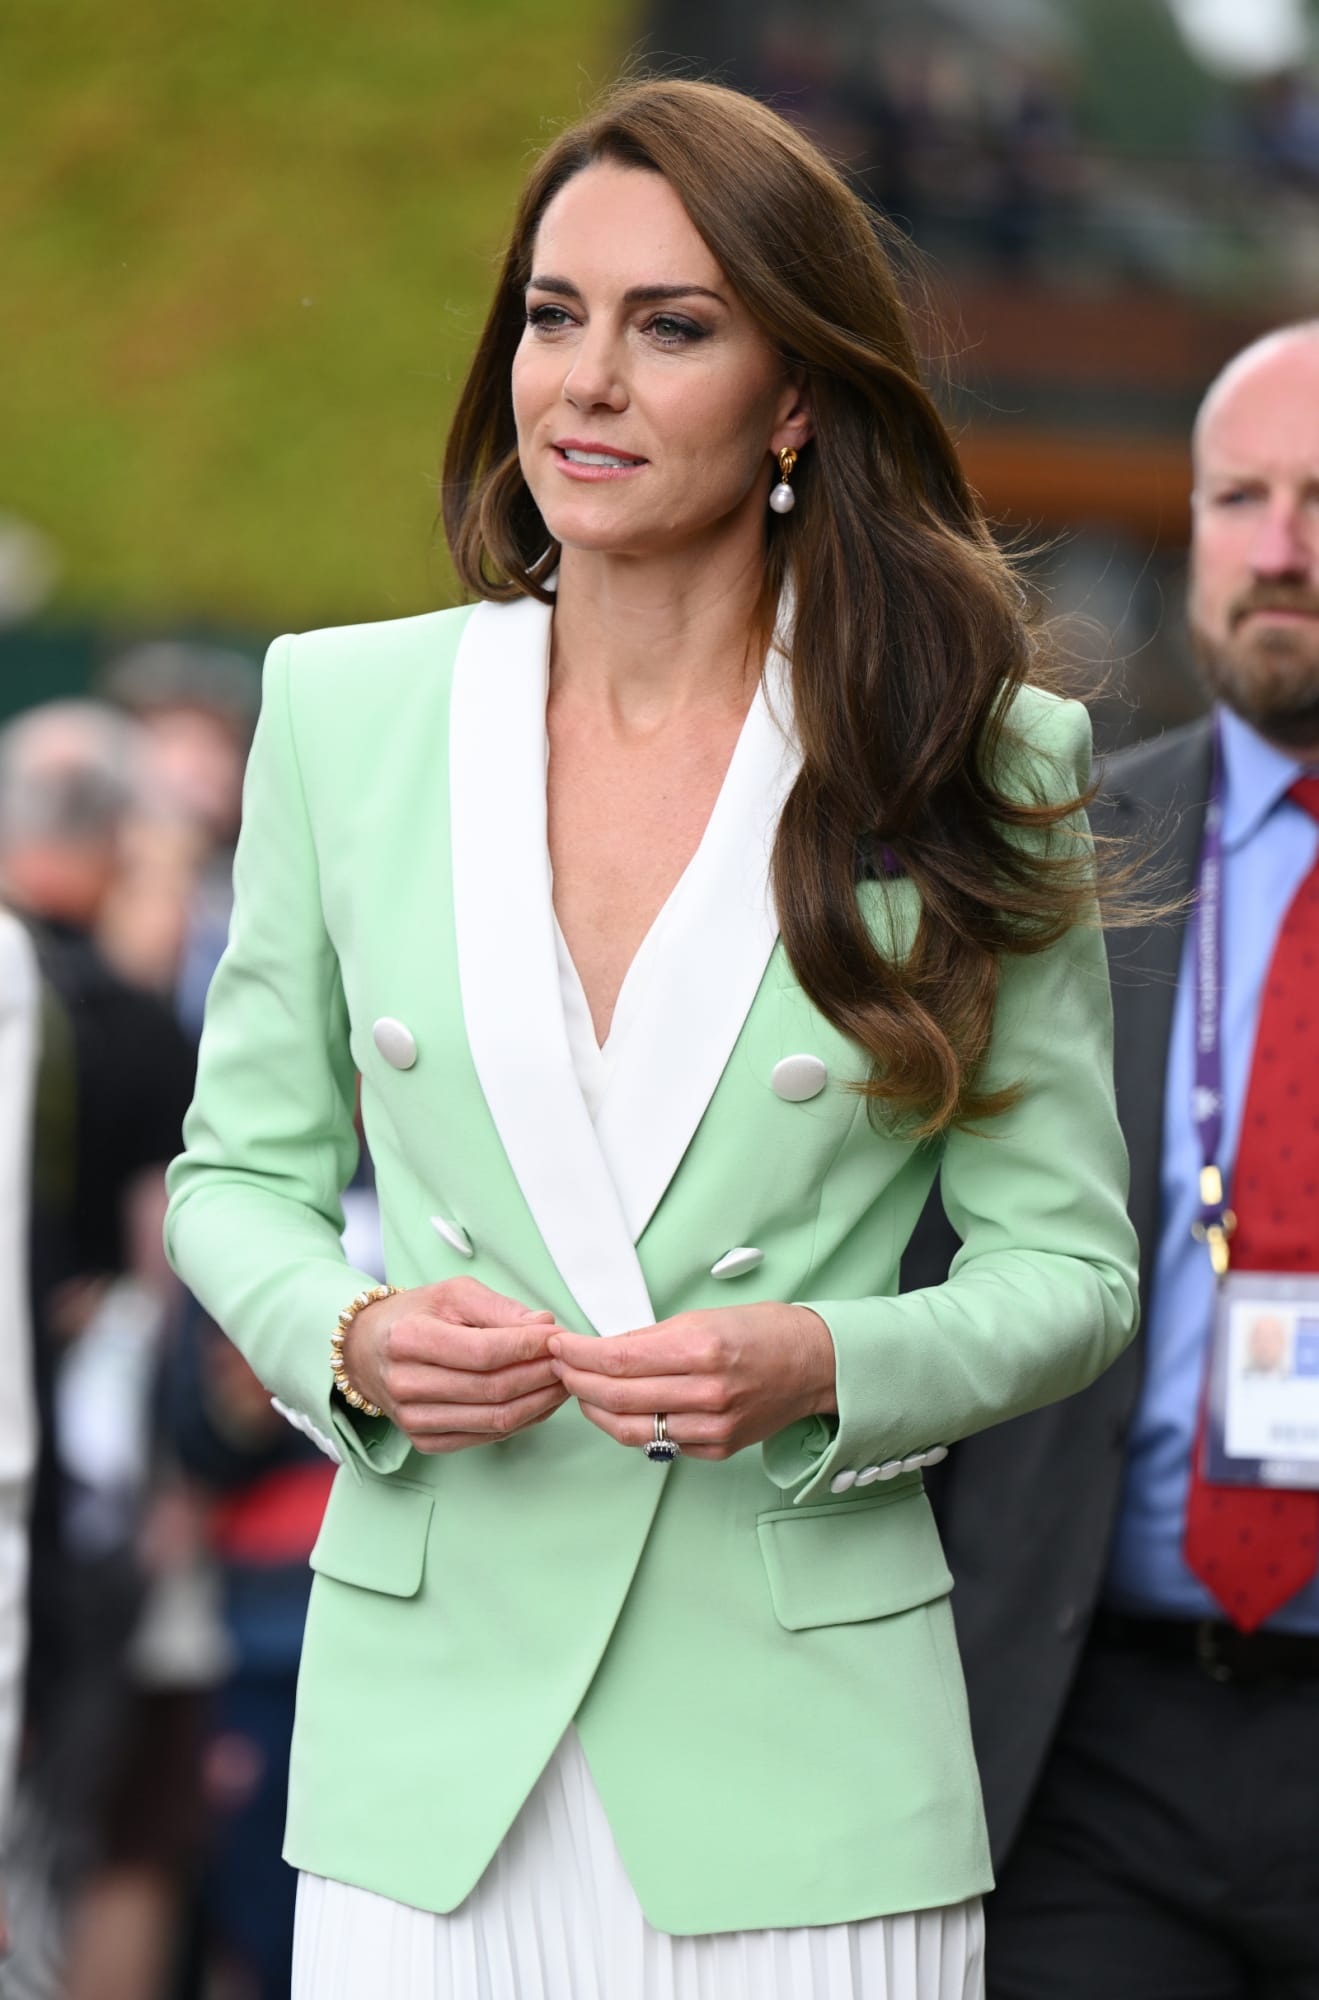 Kate Middleton's Mint Green Blazer Steals the Show at Wimbledon